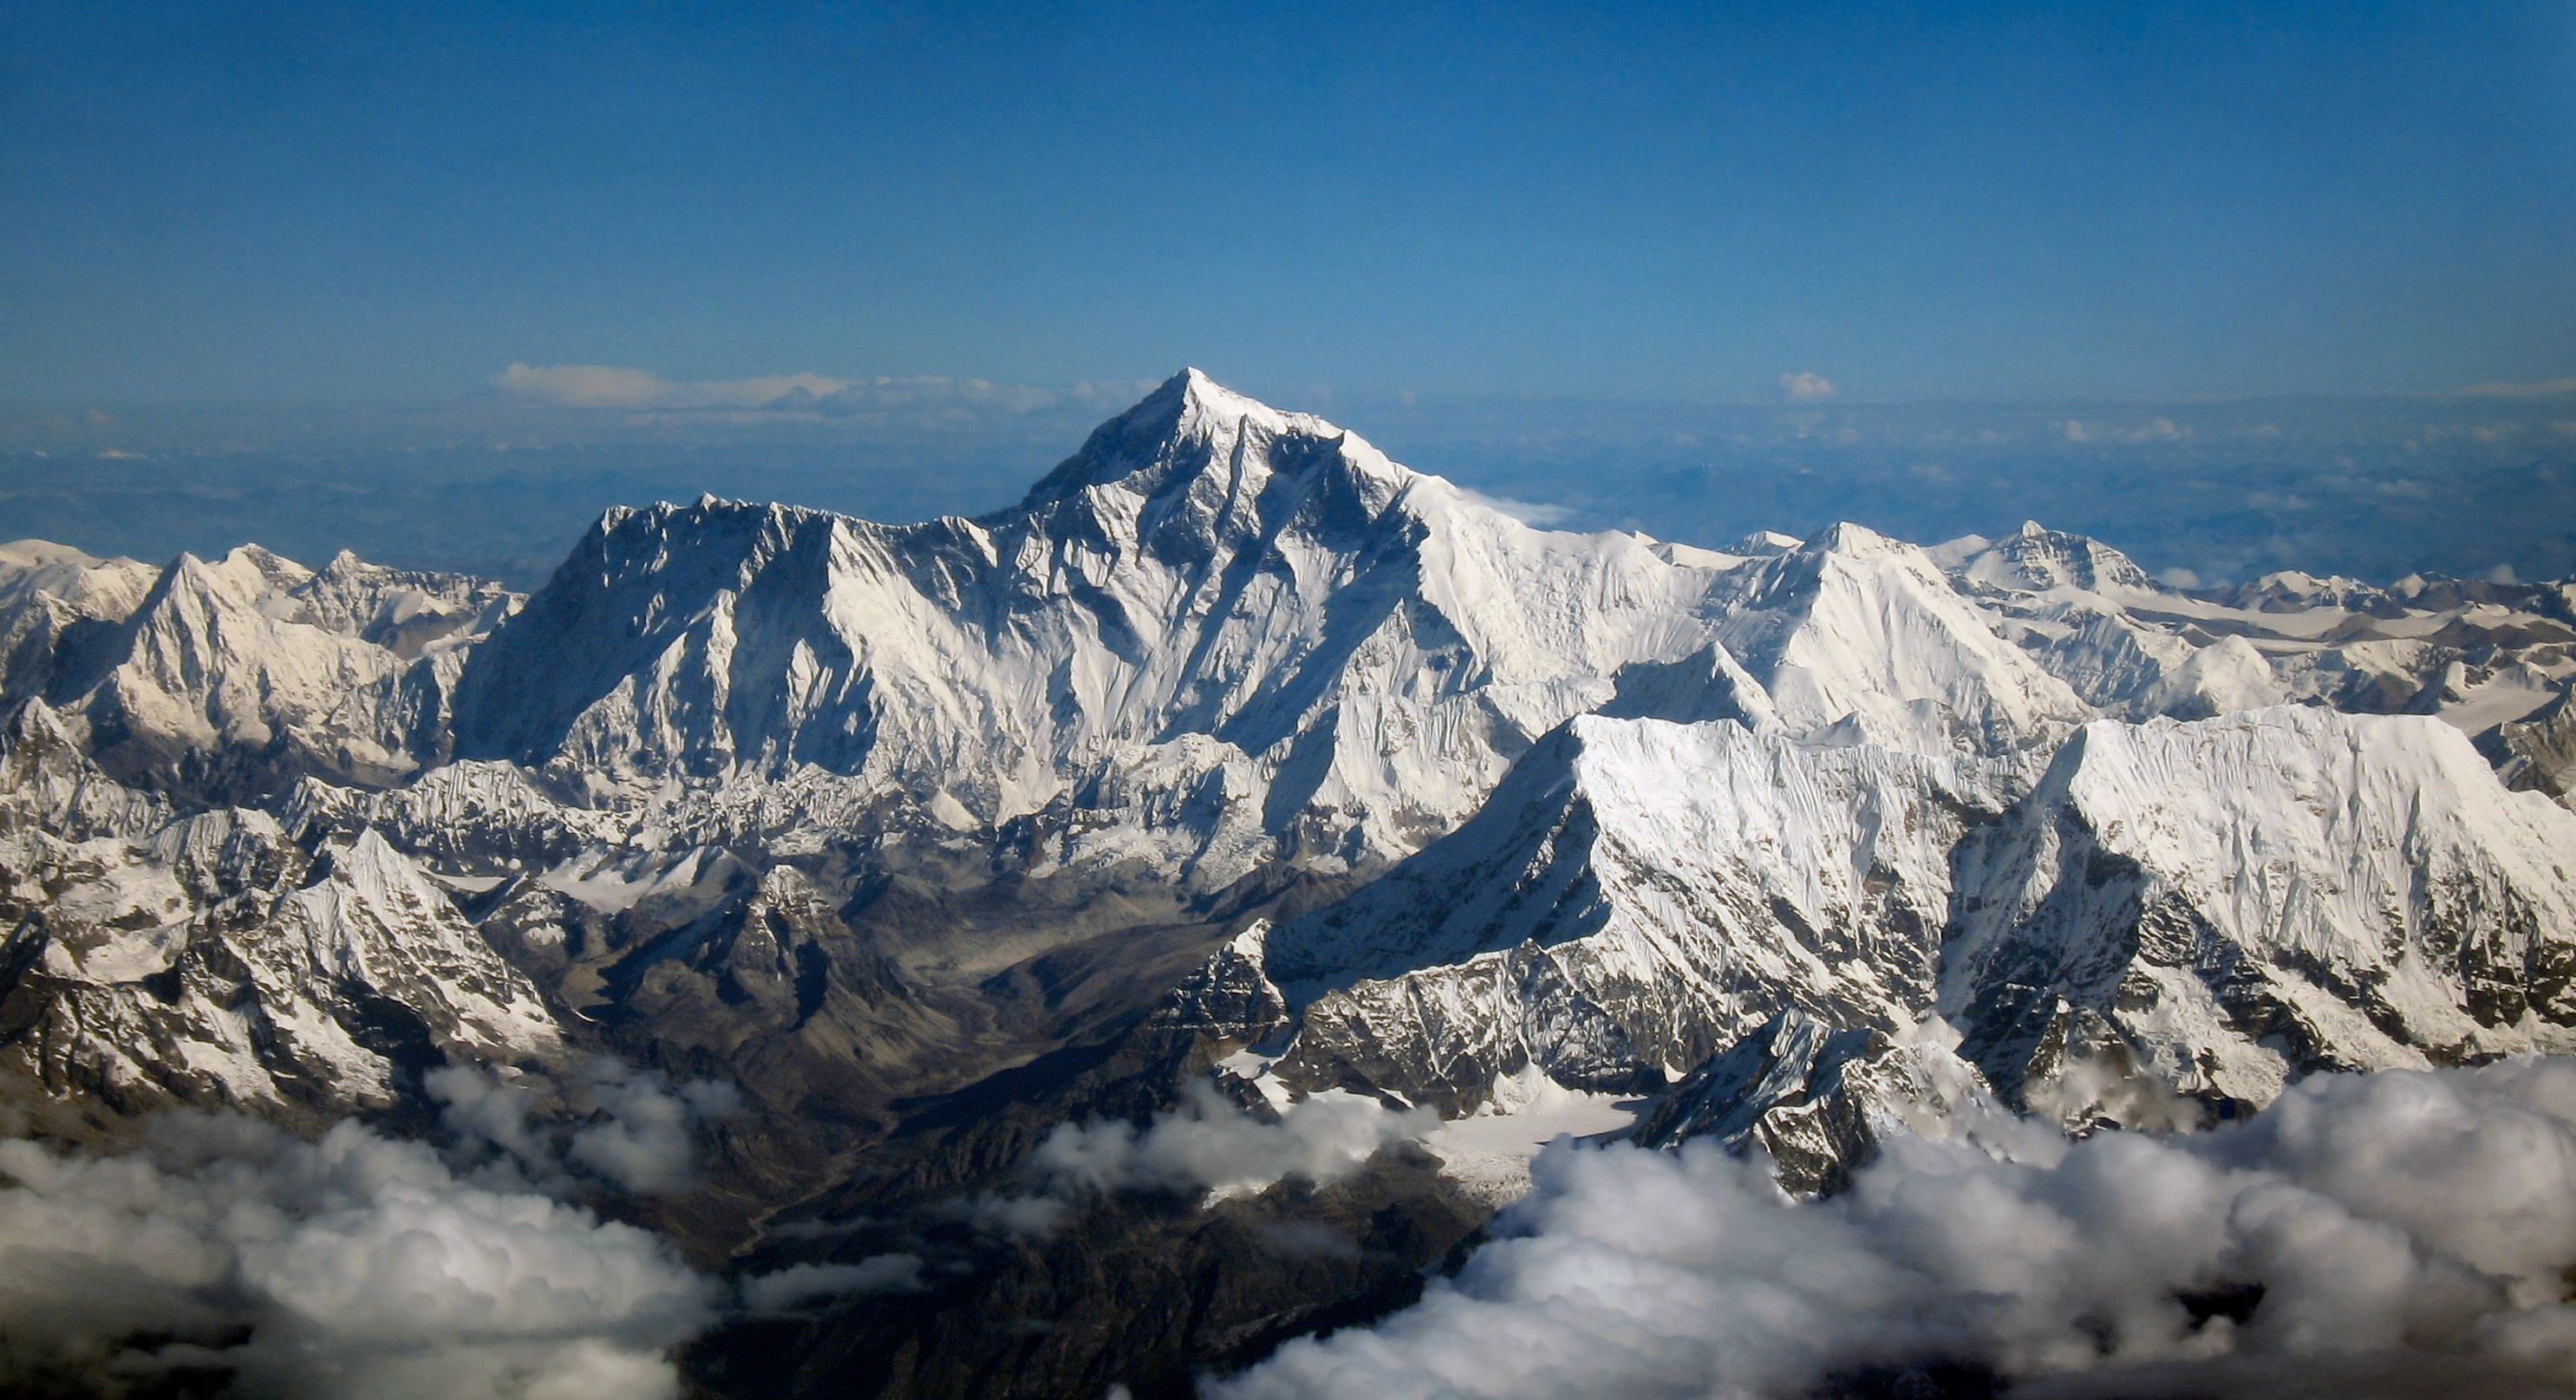 Mount_Everest_as_seen_from_Drukair2_PLW_edit (1).jpg